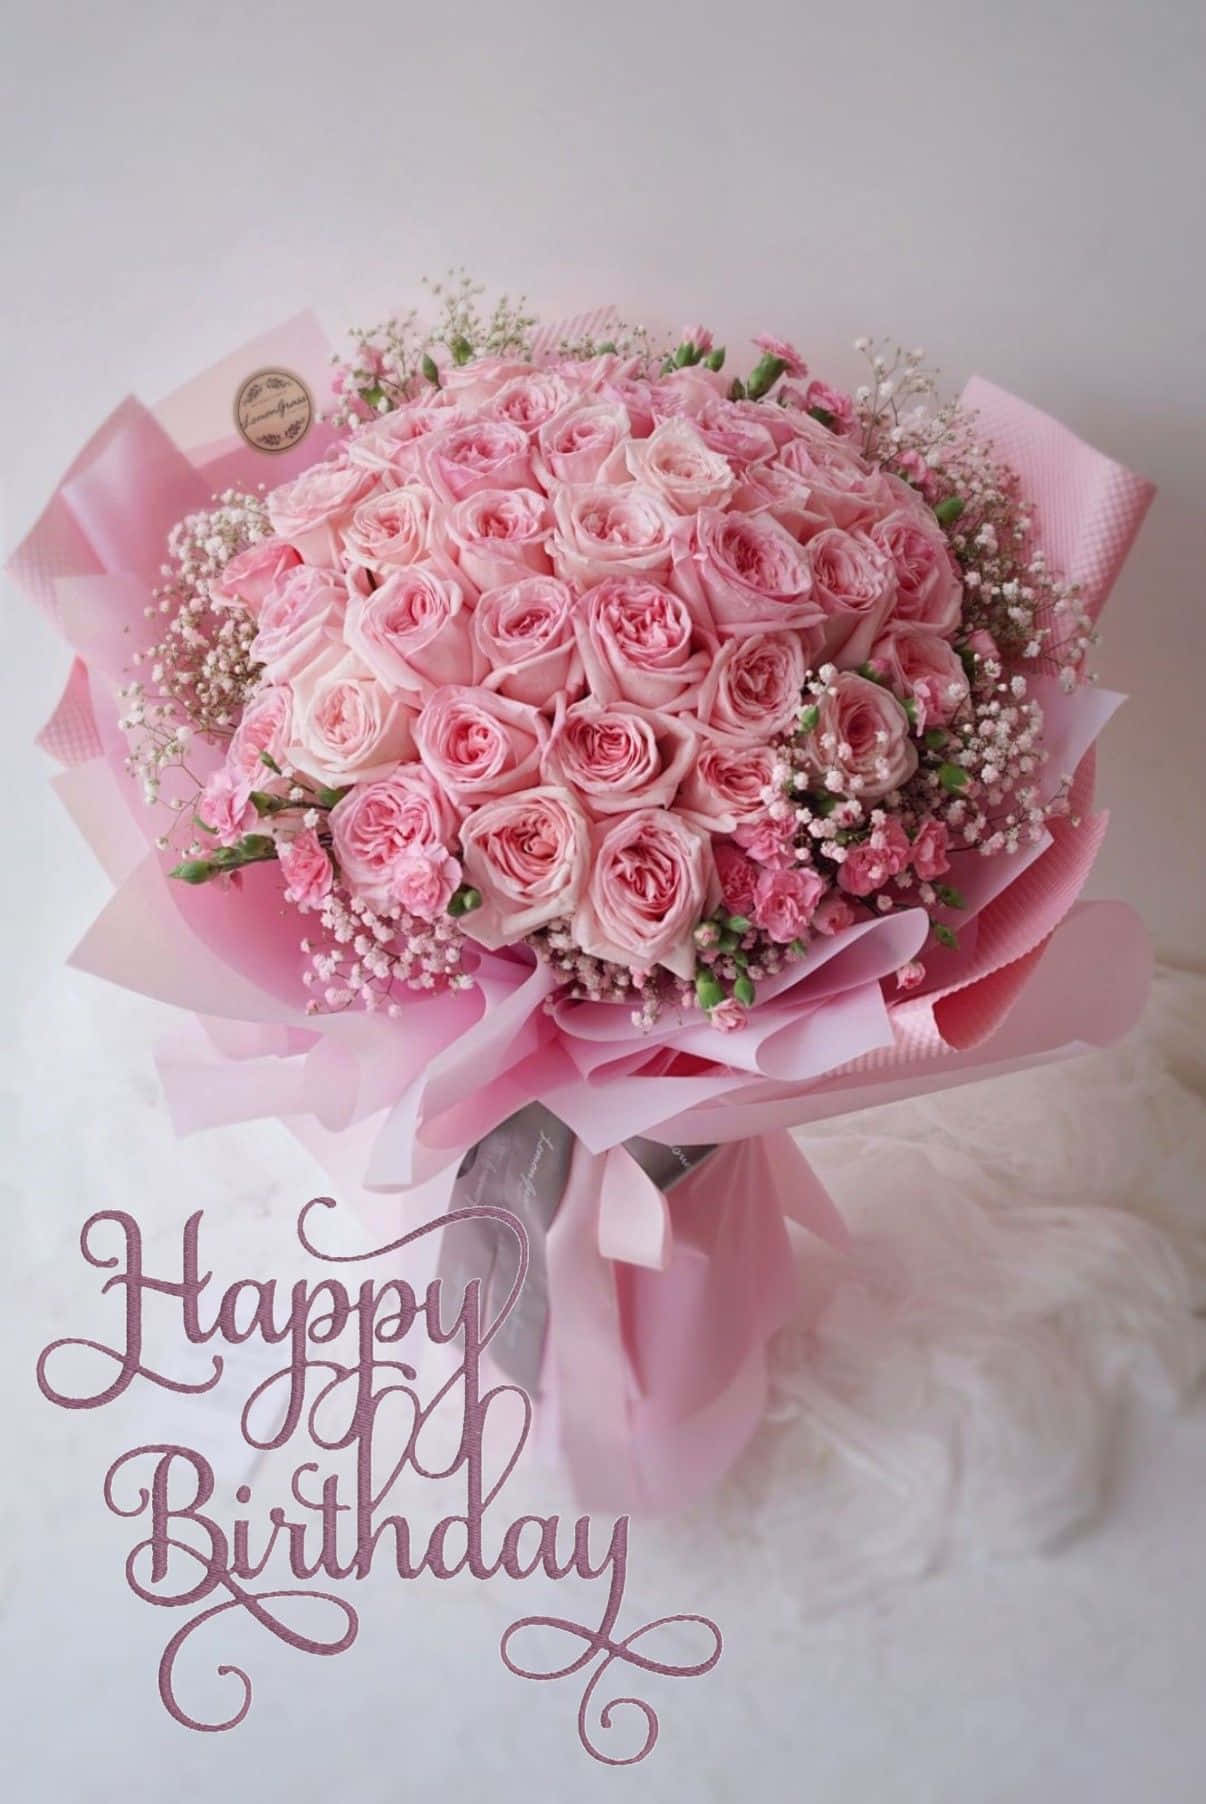 Happy Birthday Wish Flowers Images | Best Flower Site